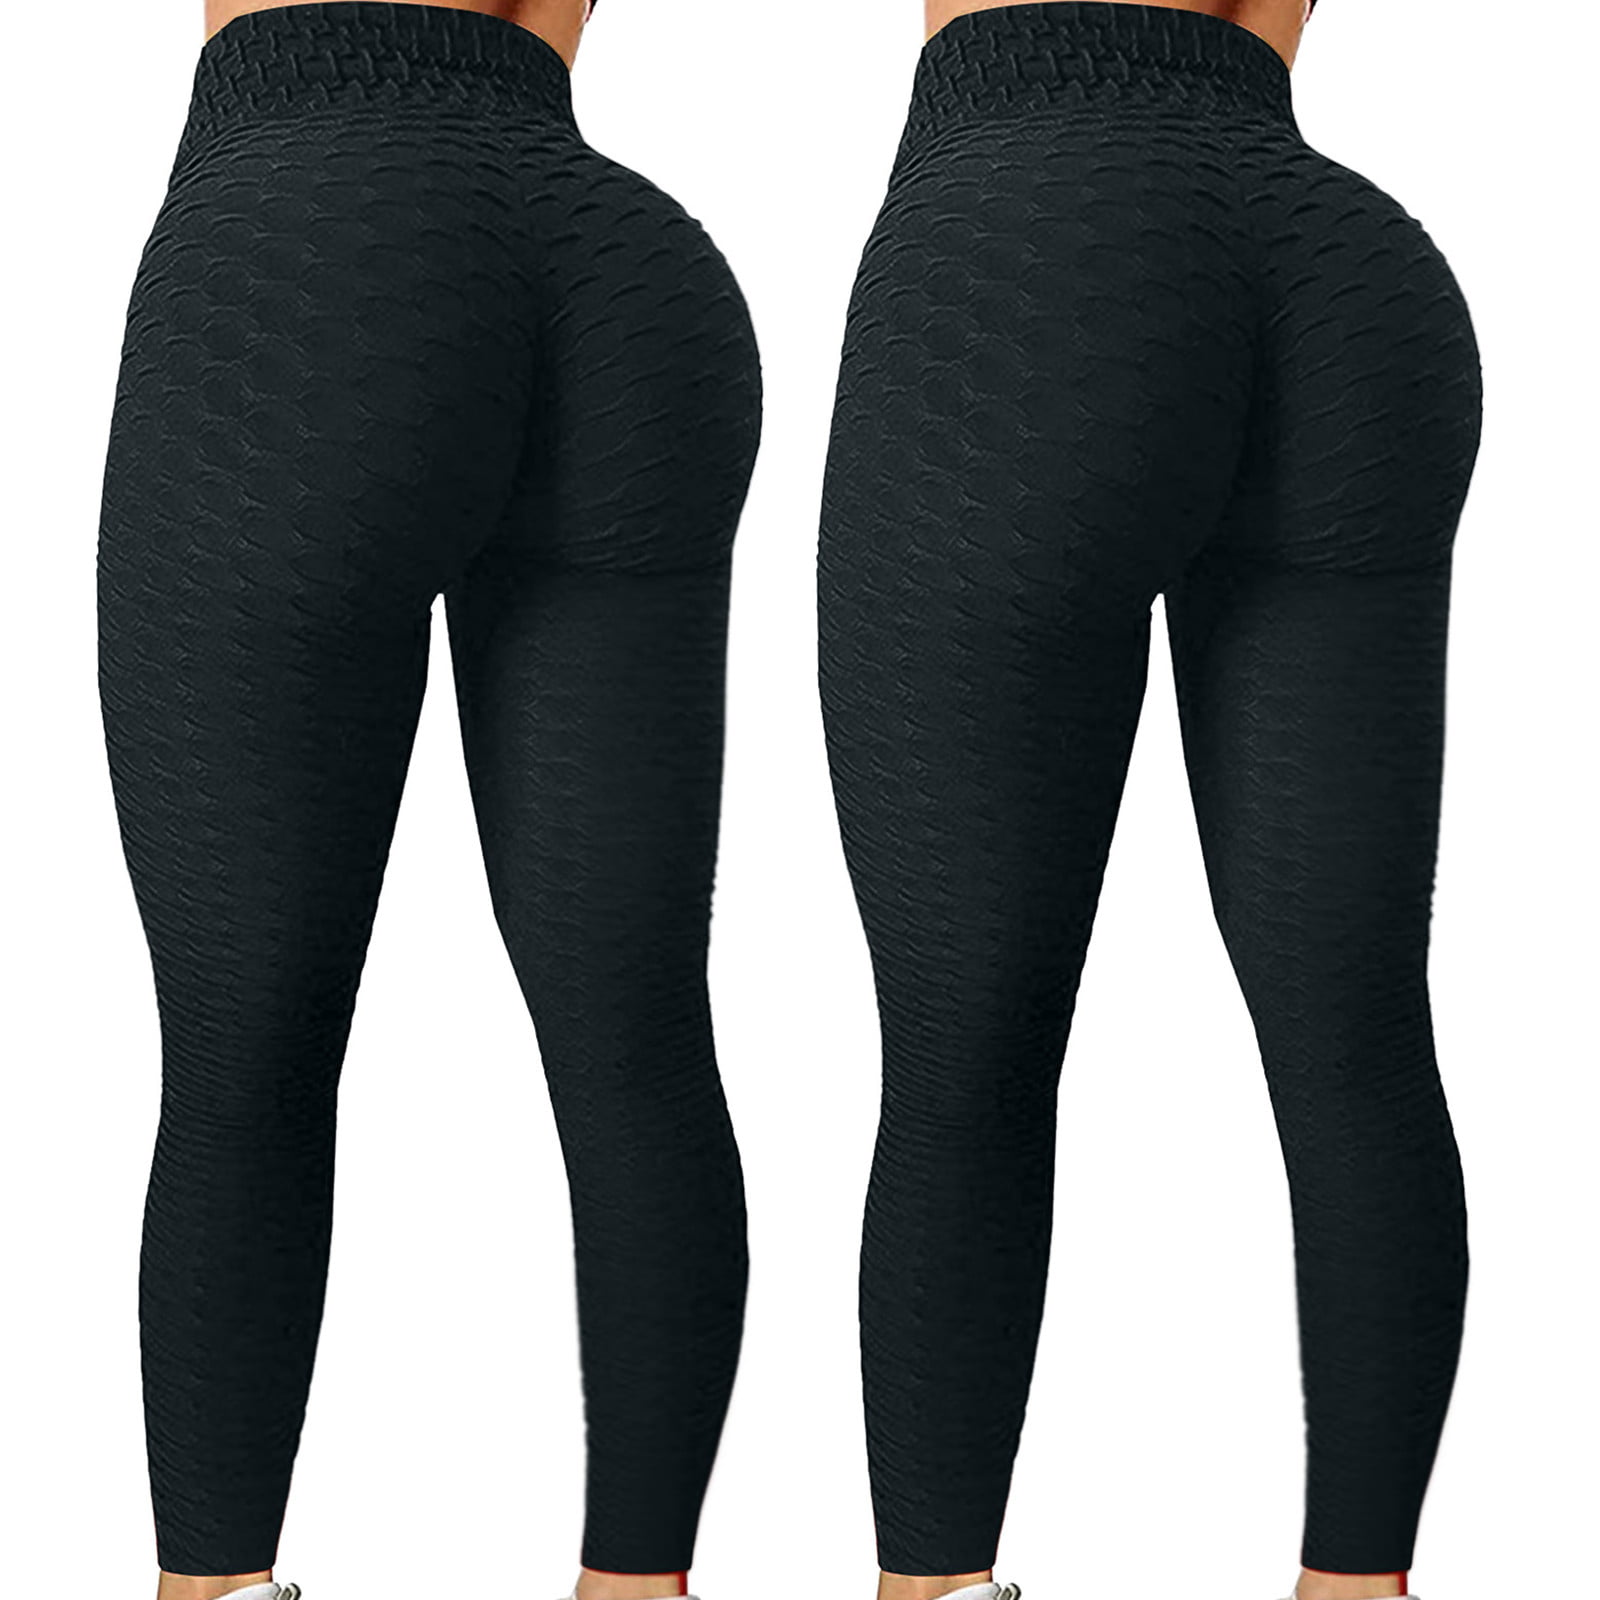 Aayomet Yoga Pants For Women Seamless Workout Leggings for Women